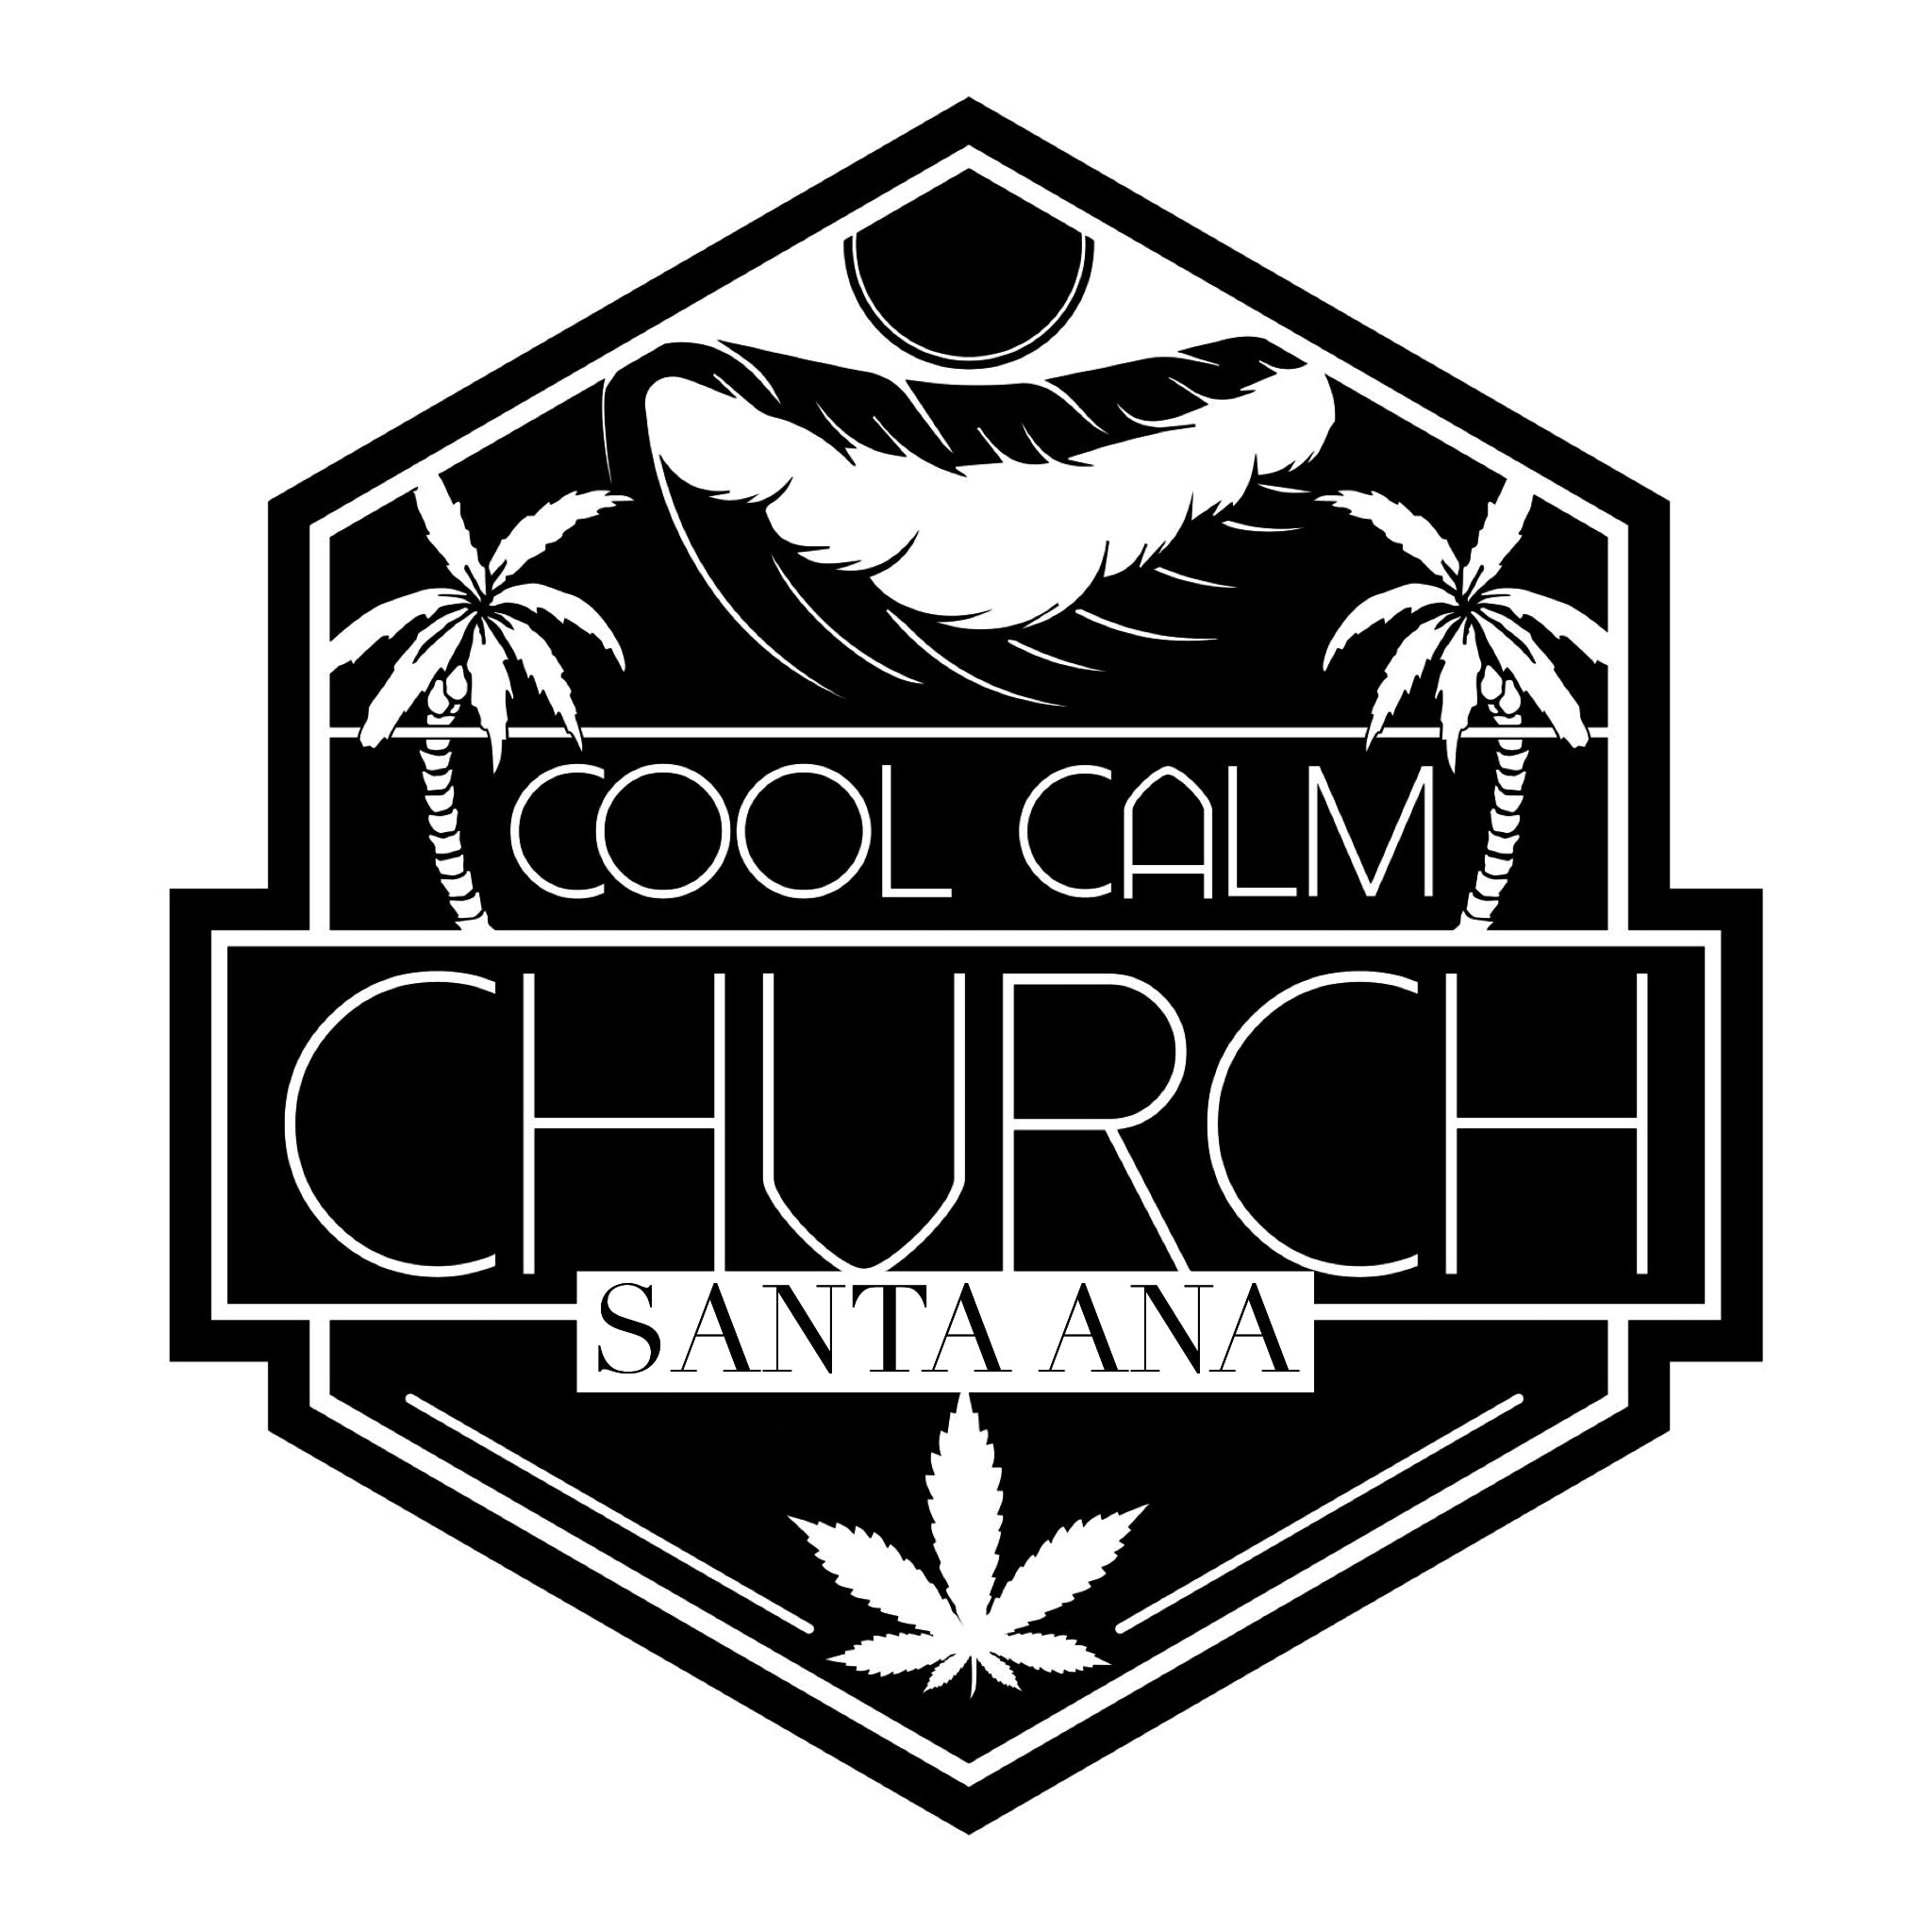 Cool Calm Church - Santa Ana - Medical Marijuana Doctors - Cannabizme.com